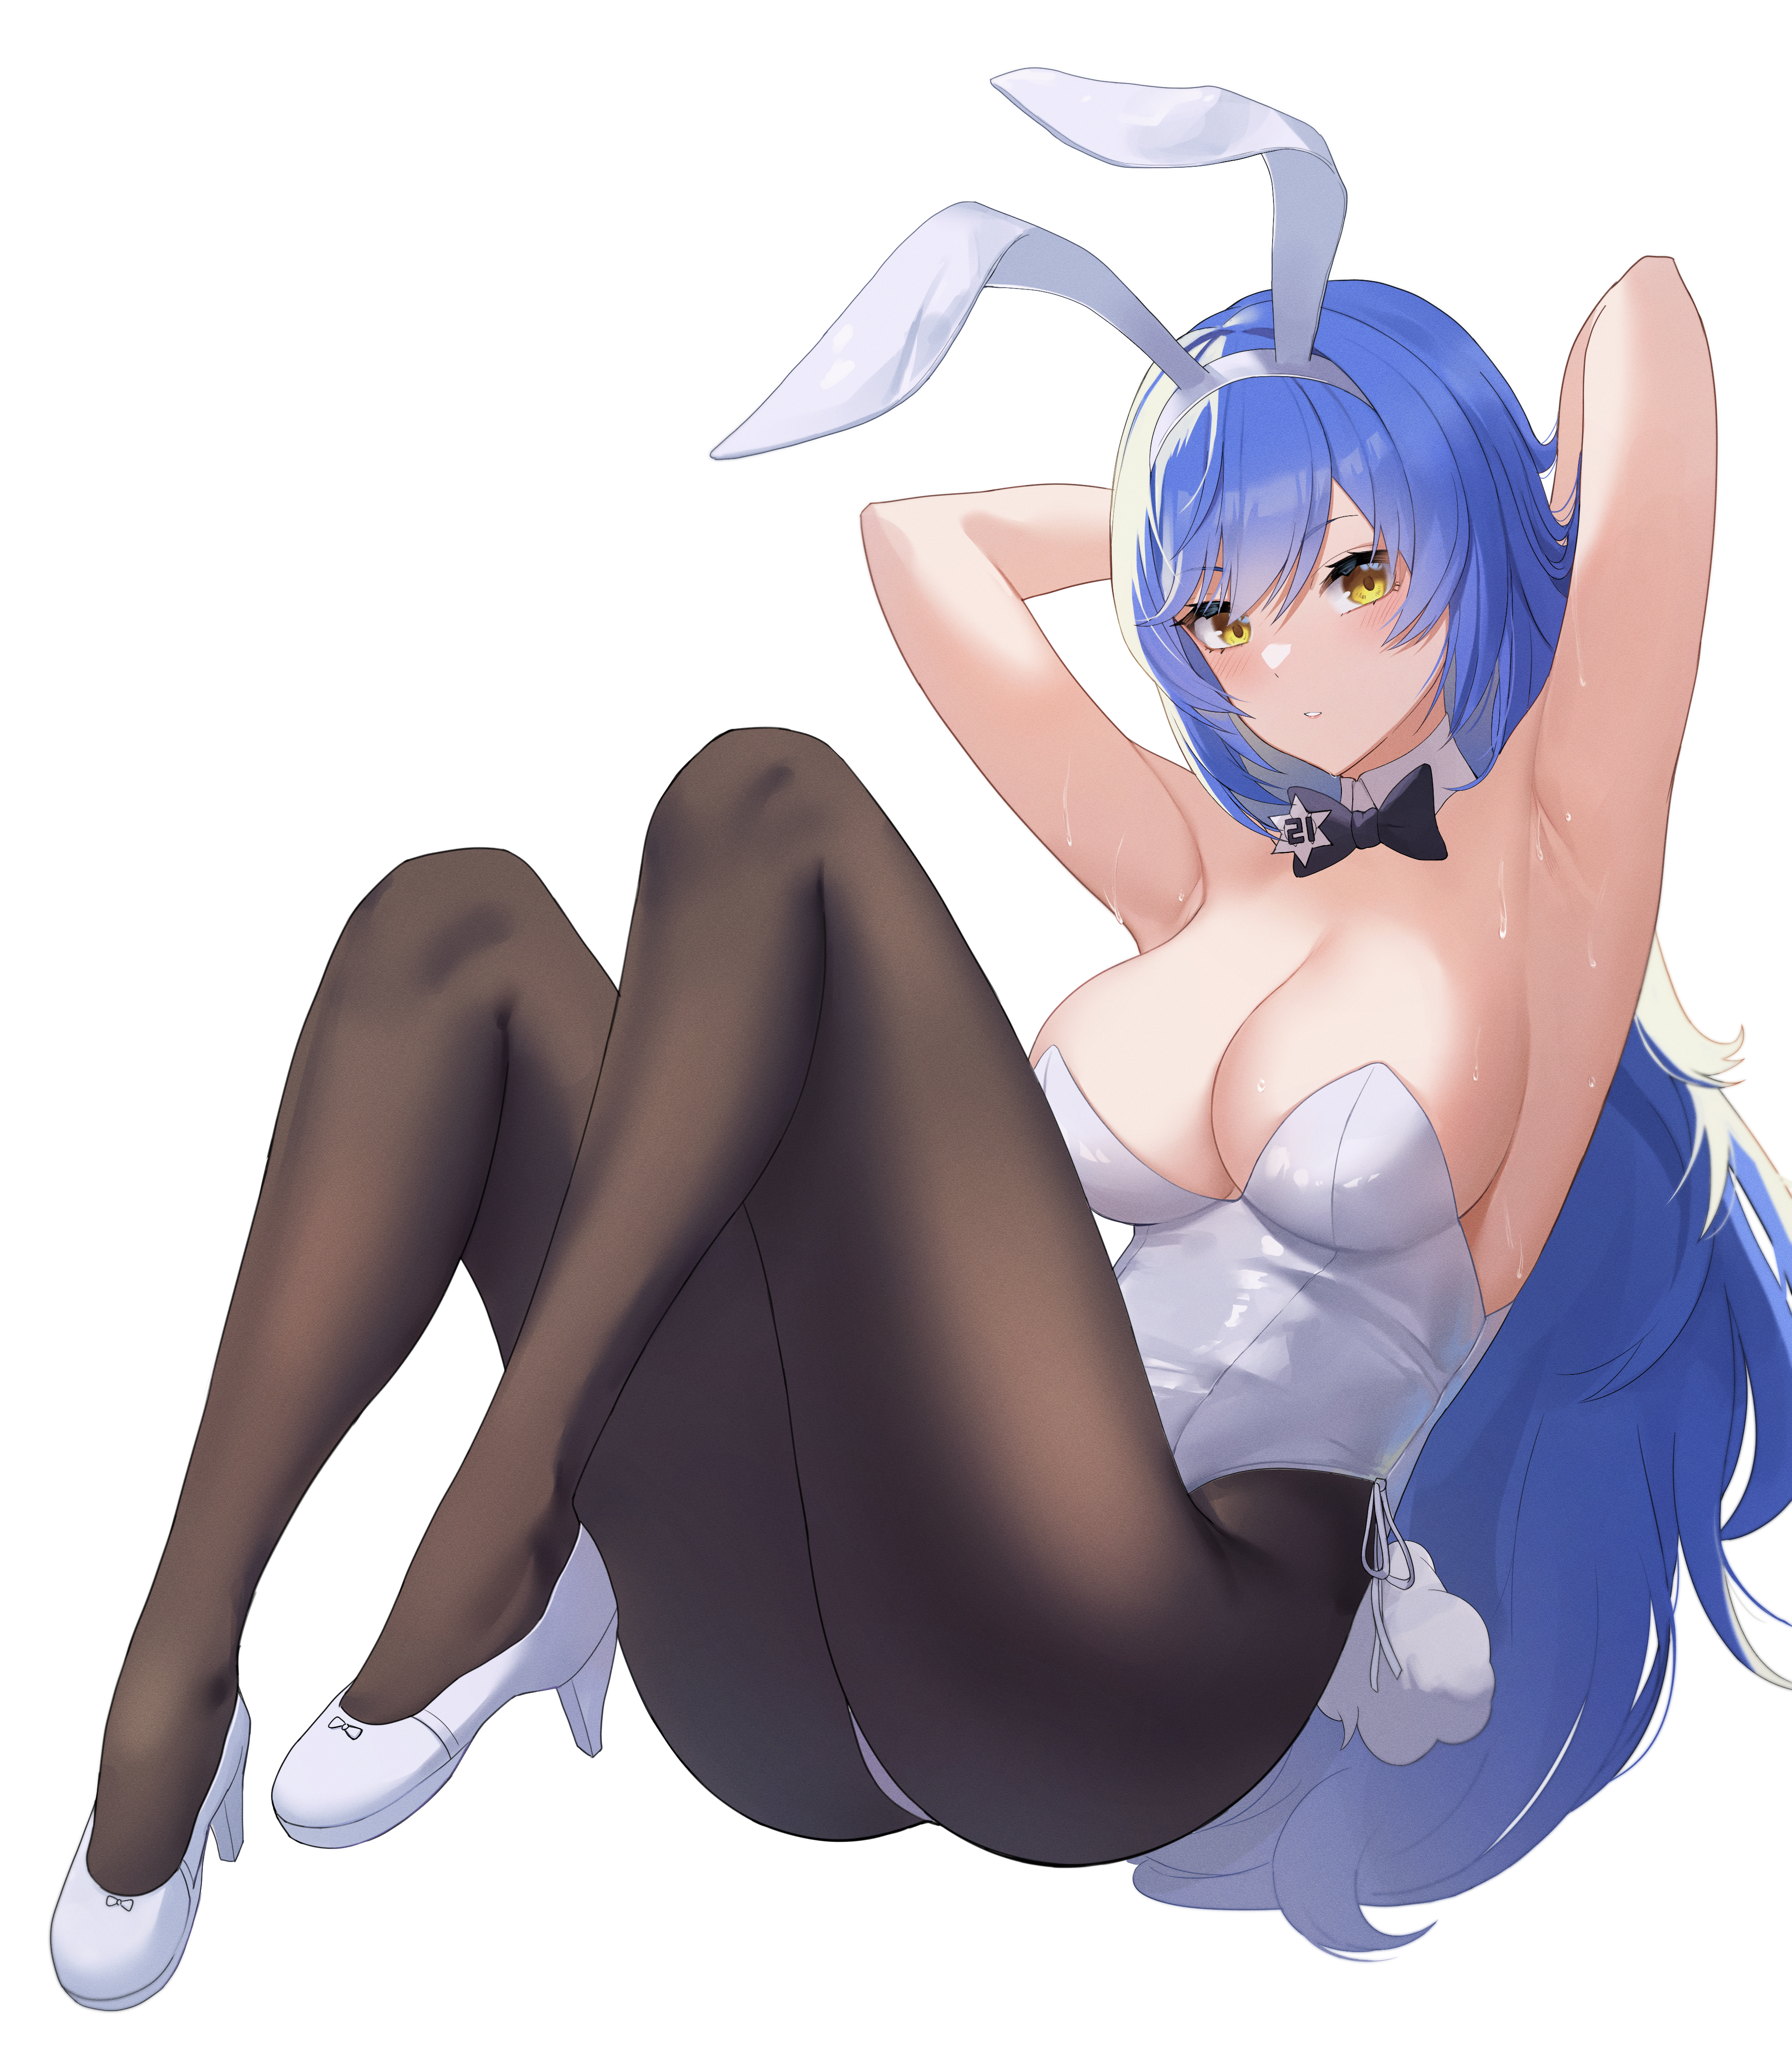 Anime 3826x4389 Girls Frontline TAR-21 (Girls Frontline) anime girls bunny suit bunny ears bunny tail pantyhose heels big boobs armpits blue hair yellow eyes